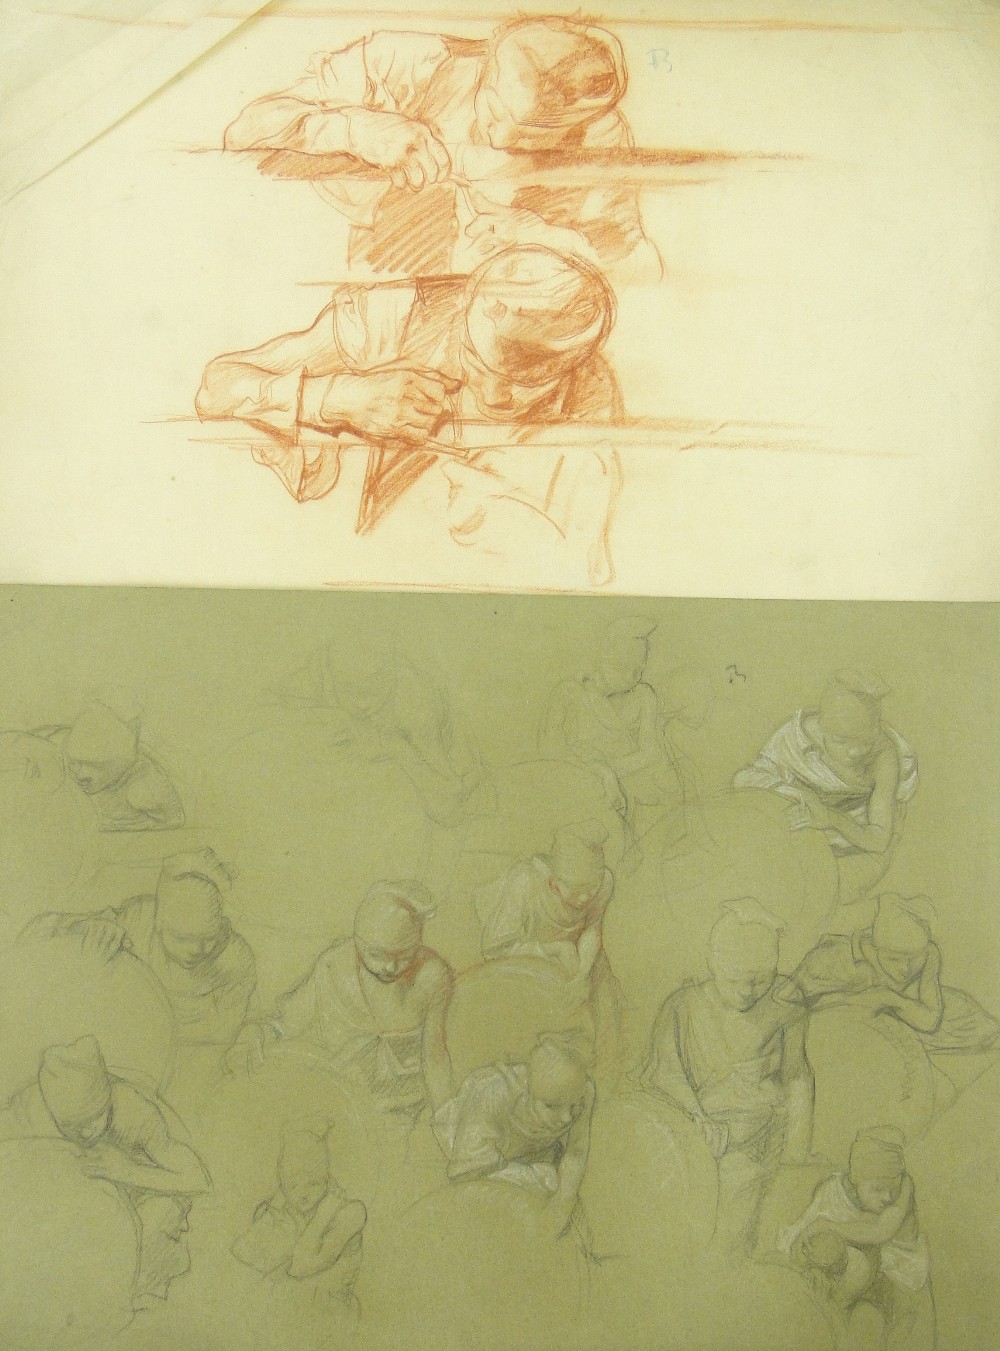 Sir Frank Brangwyn (1867-1956)
4 sanguine chalk and charcoal sketches, figure studies, unframed, (